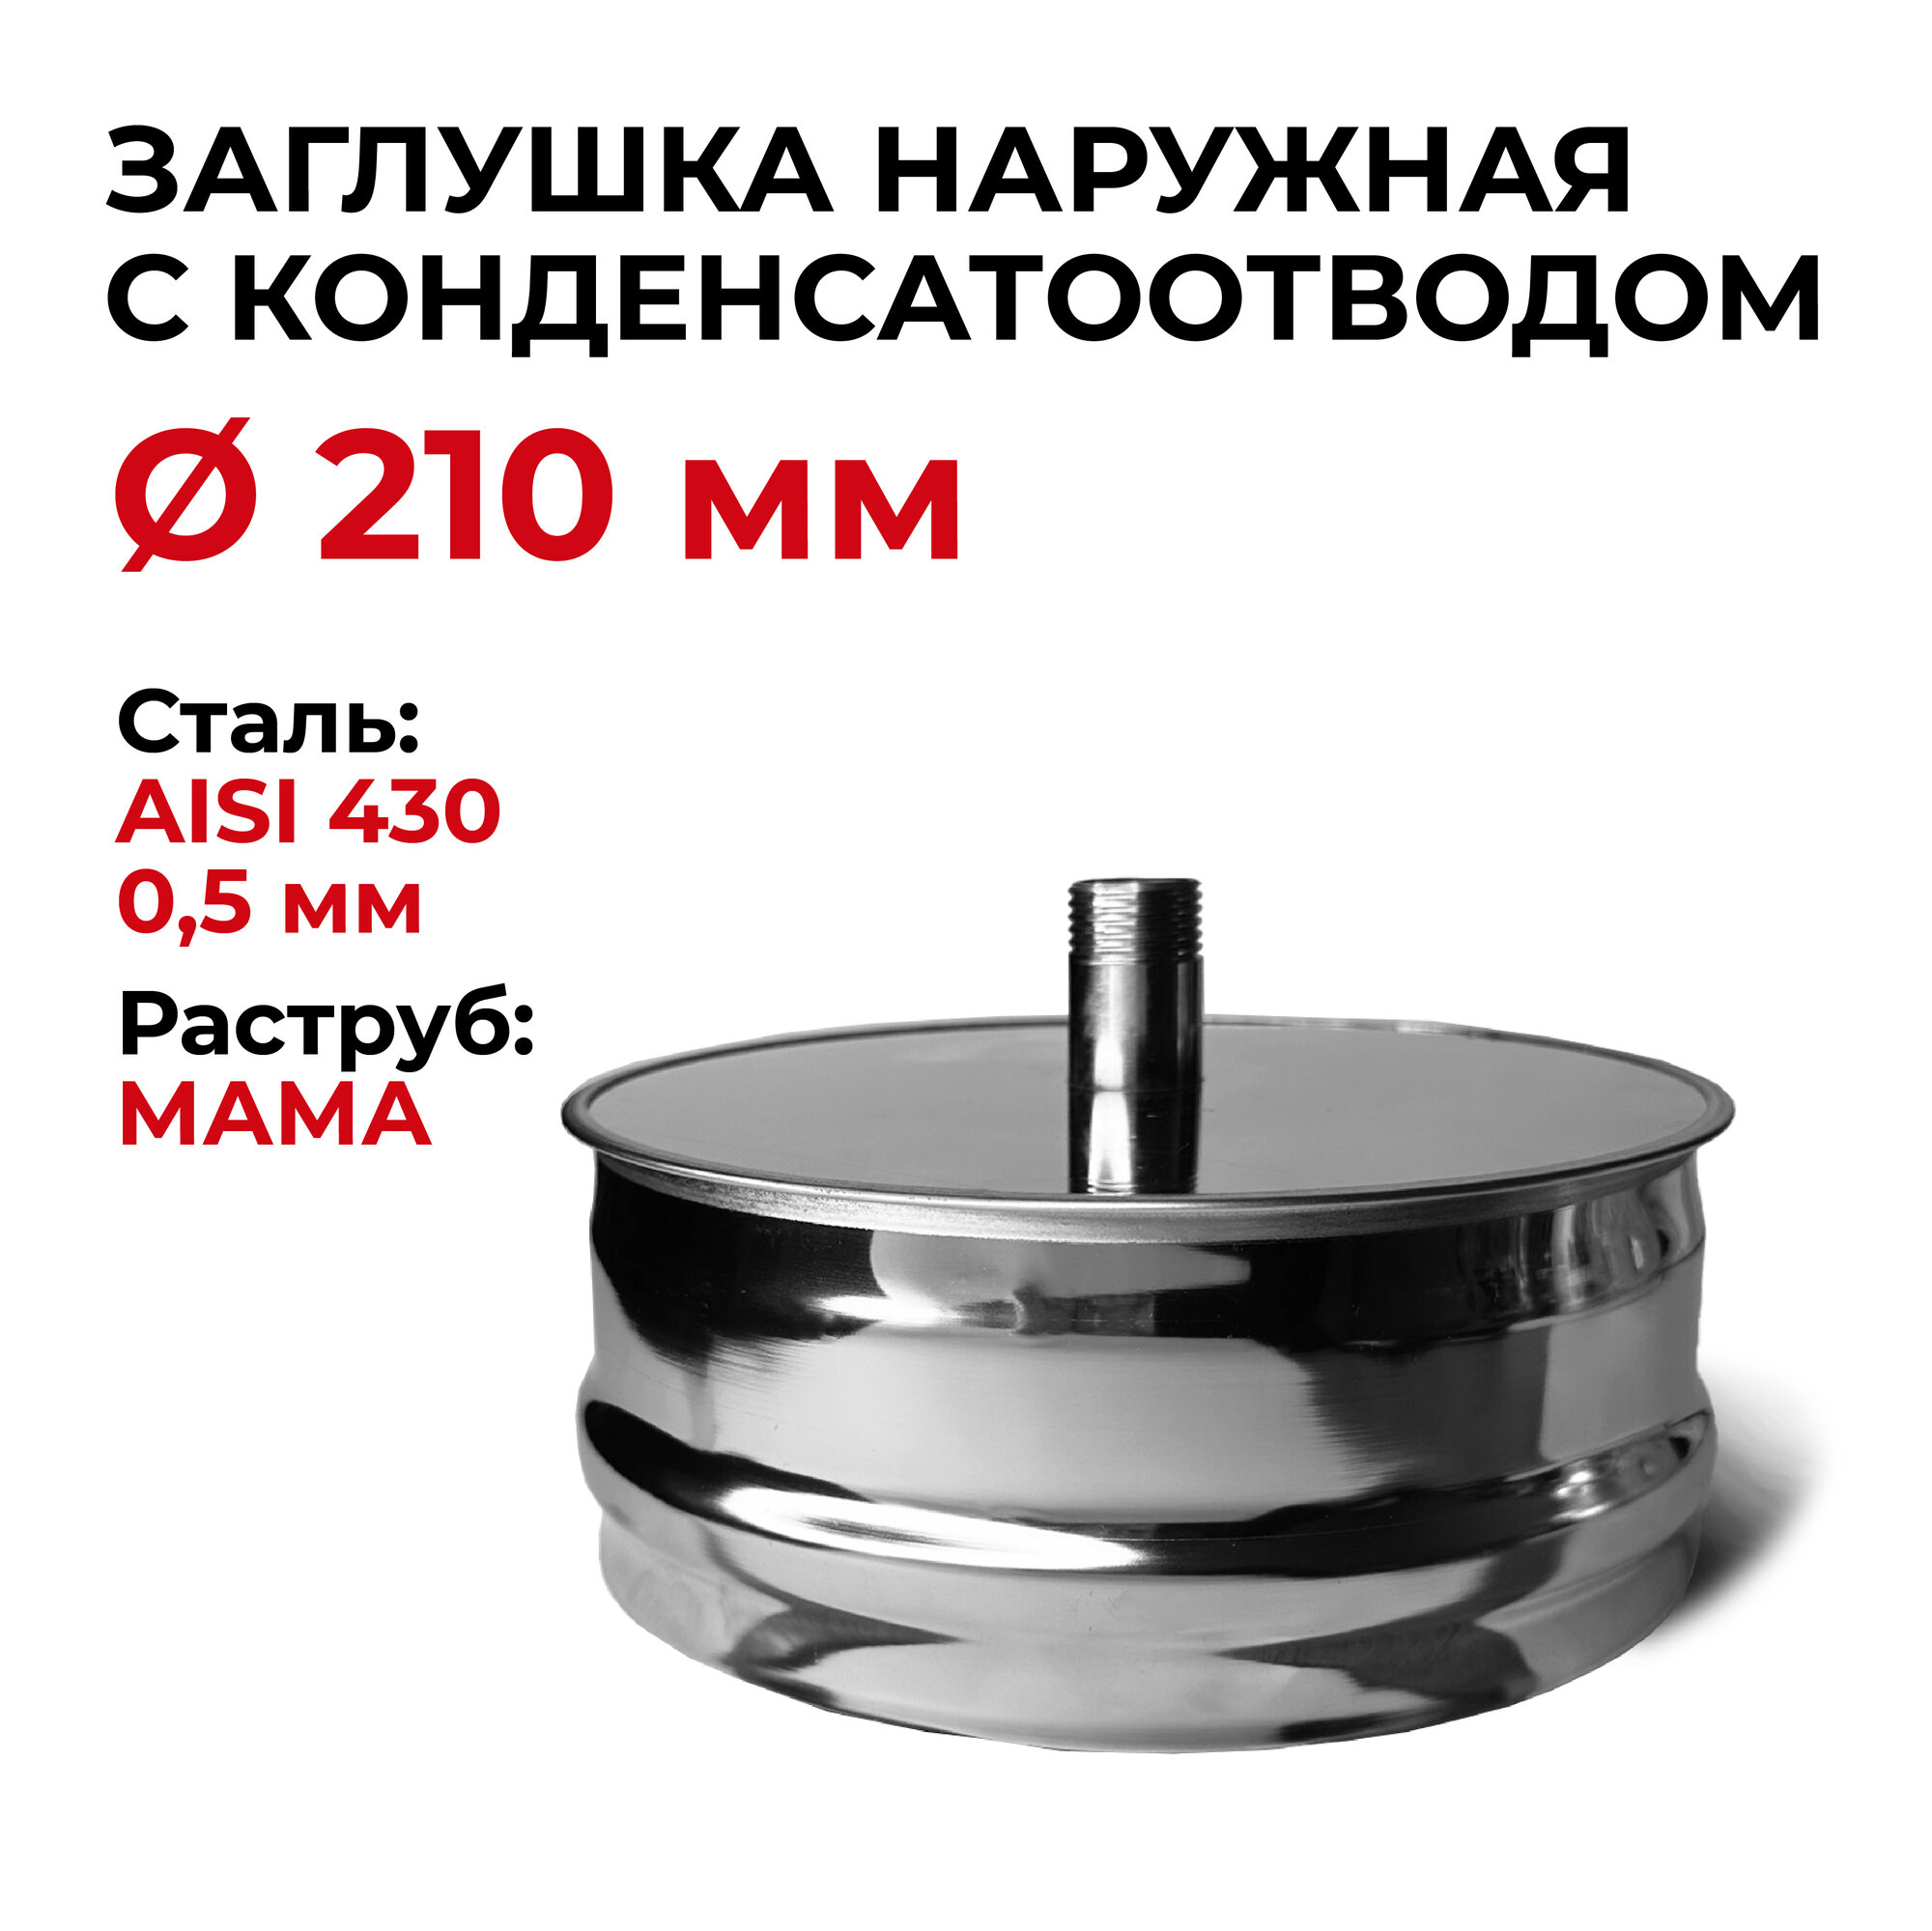 Заглушка для ревизии с конденсатоотводом 1/2 наружная мама D 210 мм "Прок"